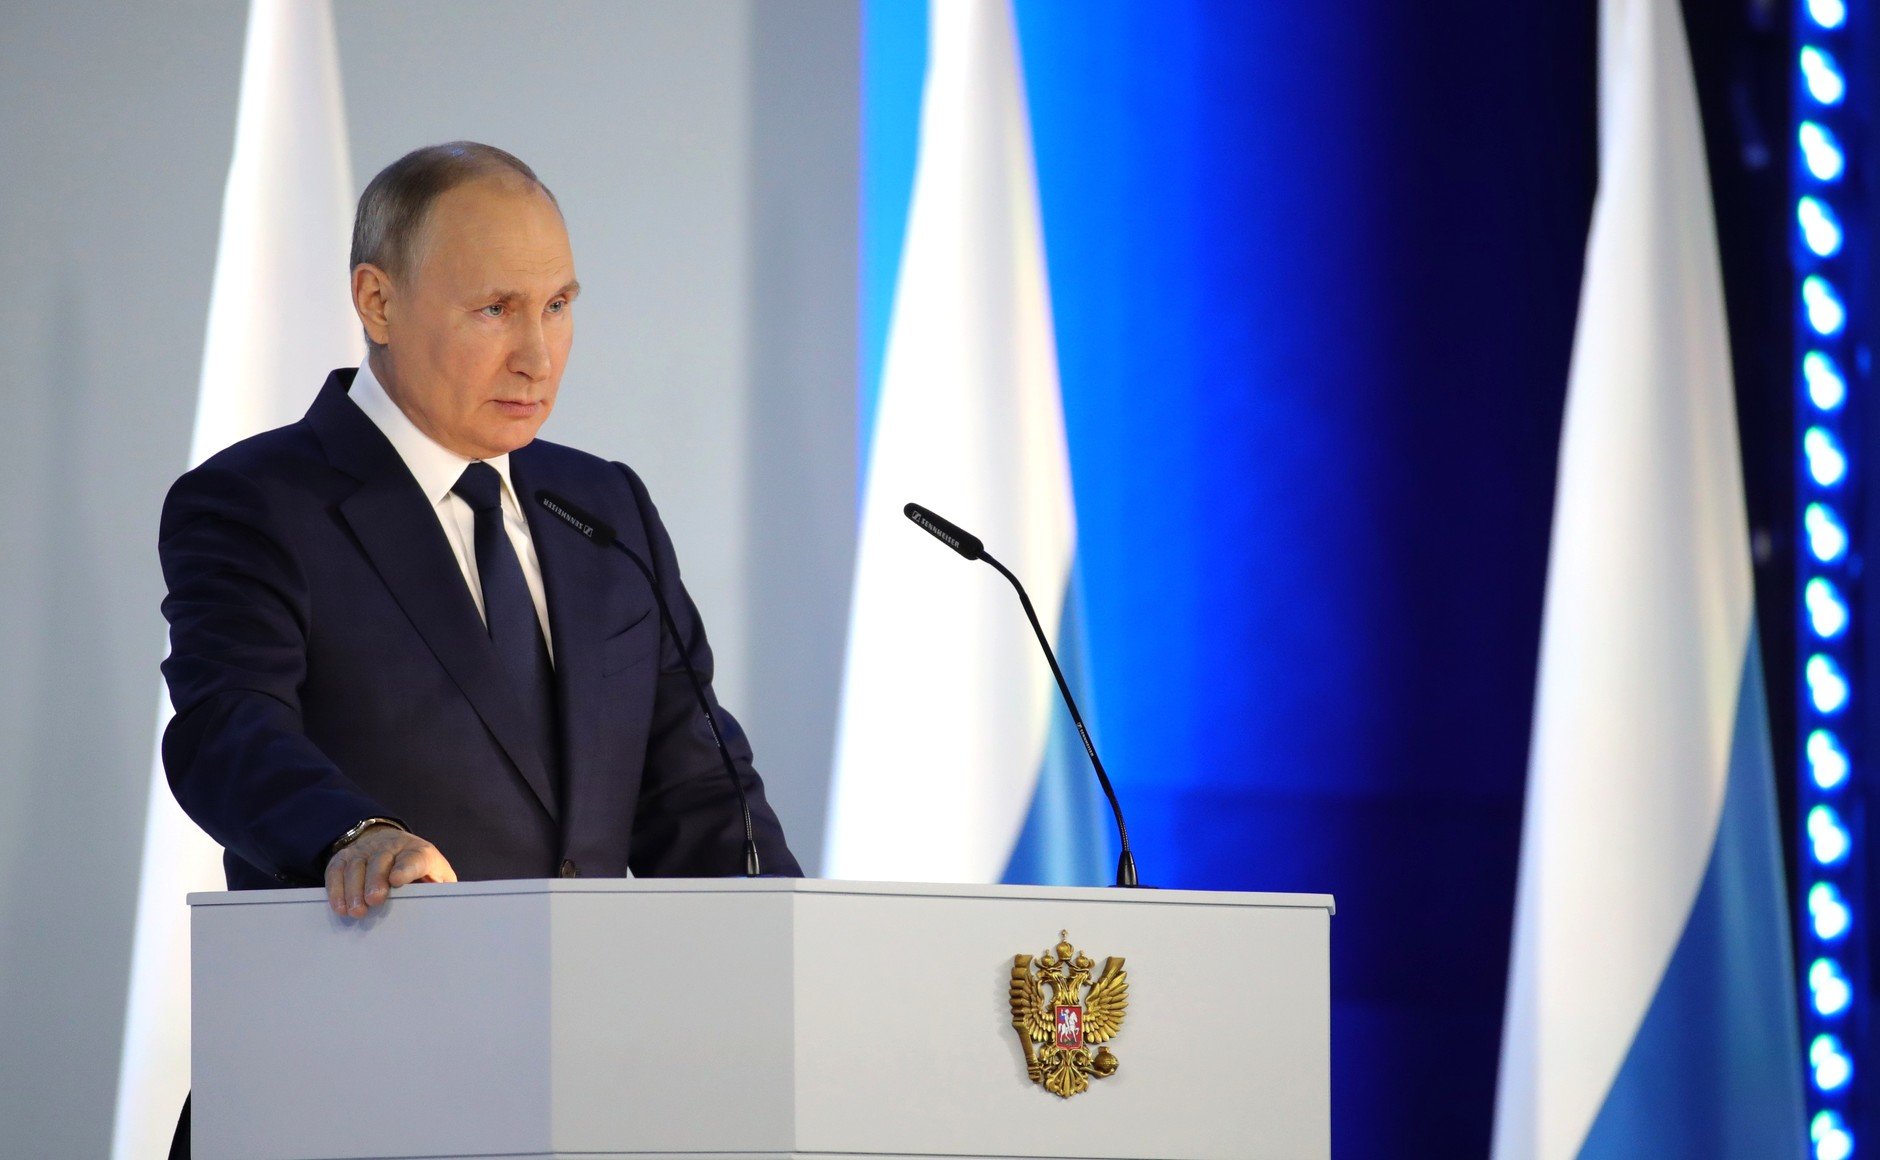 Ukrainian President Volodymyr Zelenskiy challenges Putin